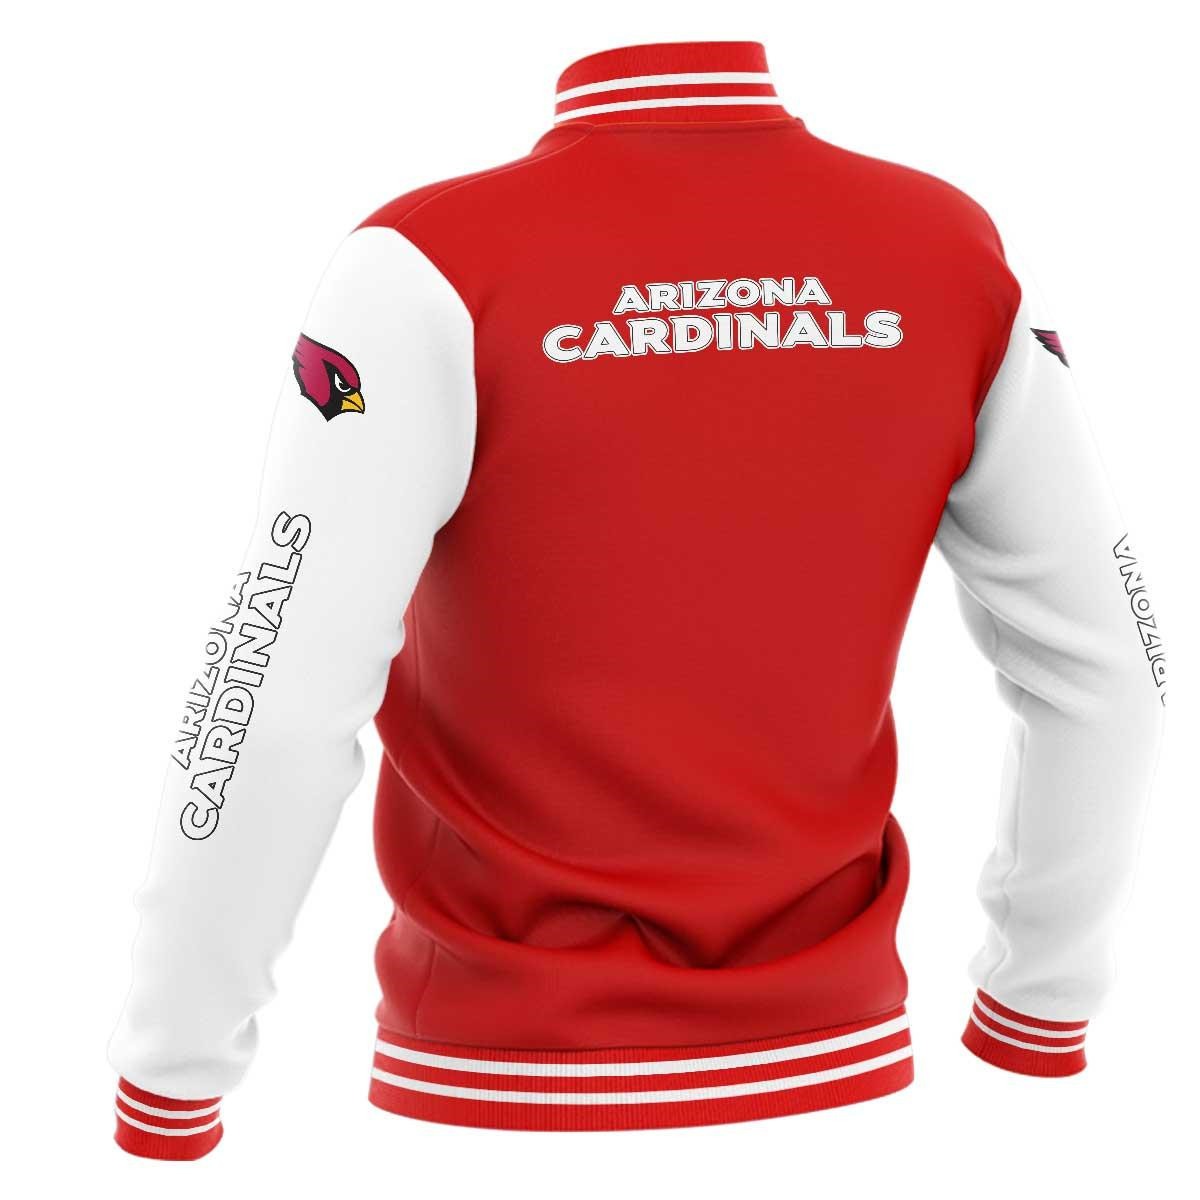 Arizona Cardinals Baseball Jacket